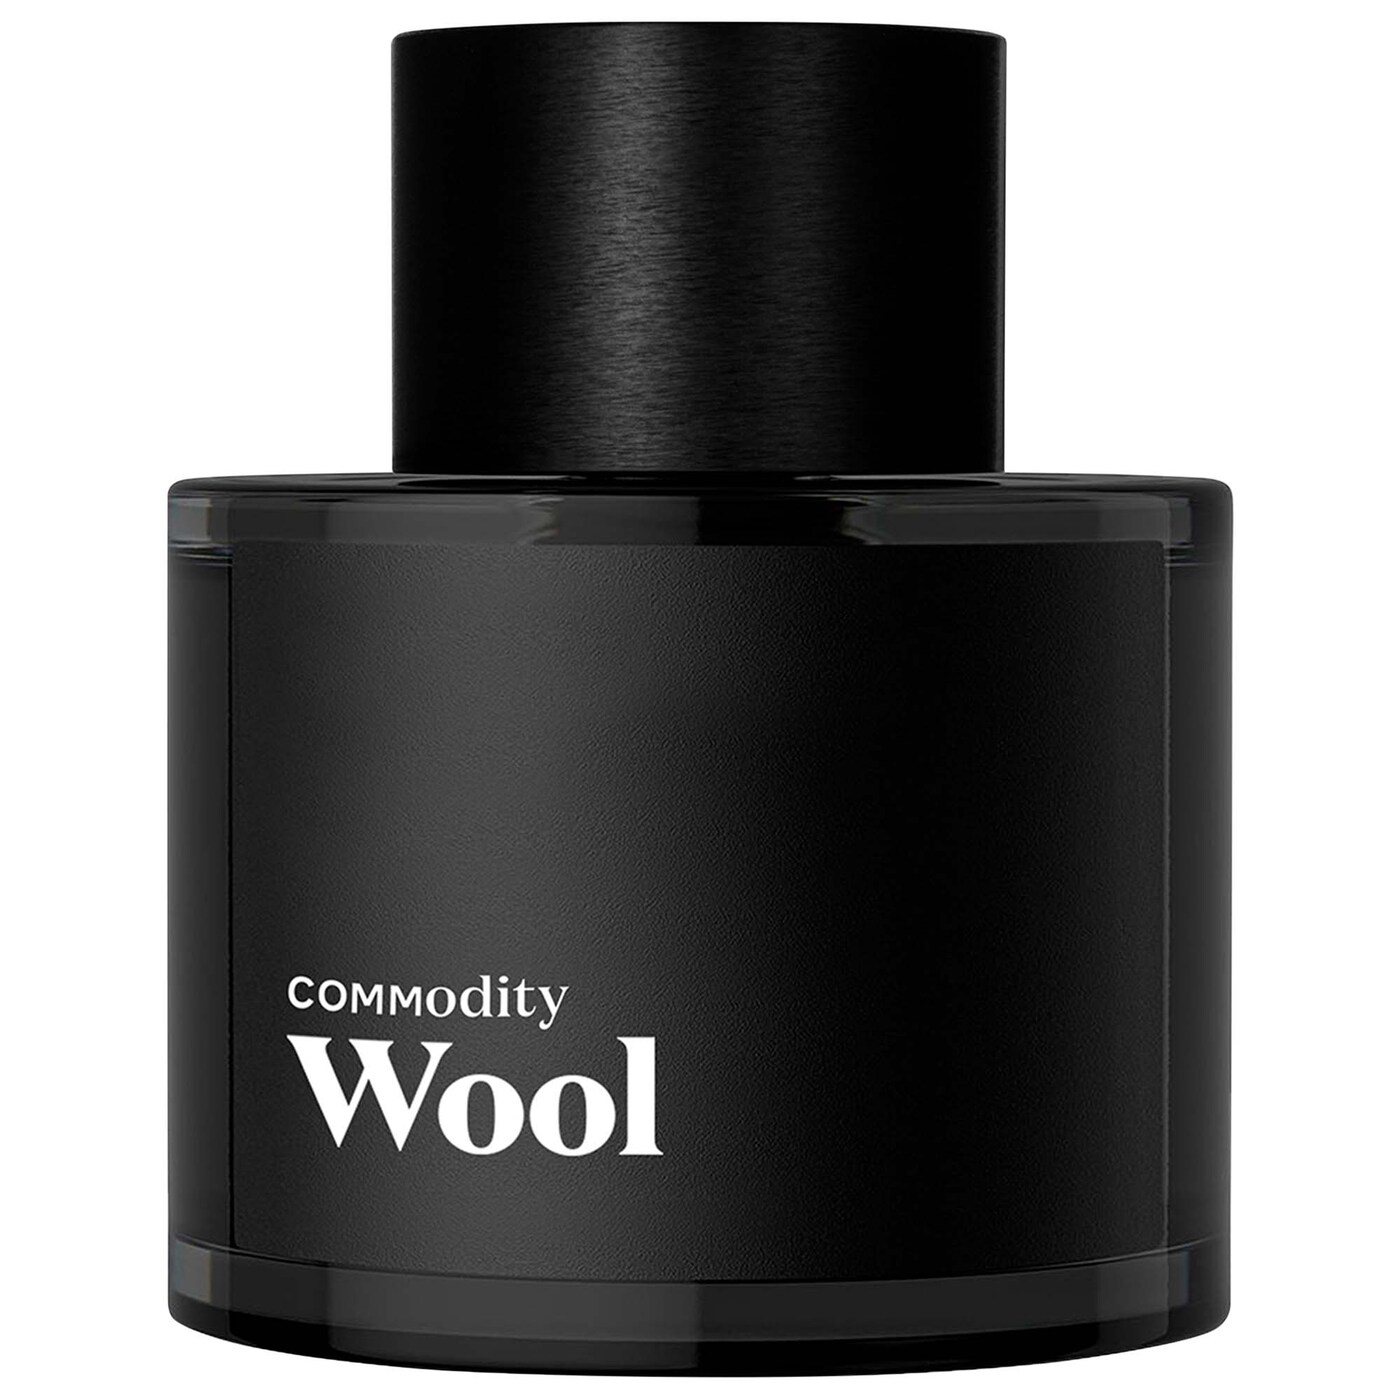 Commodity Wool